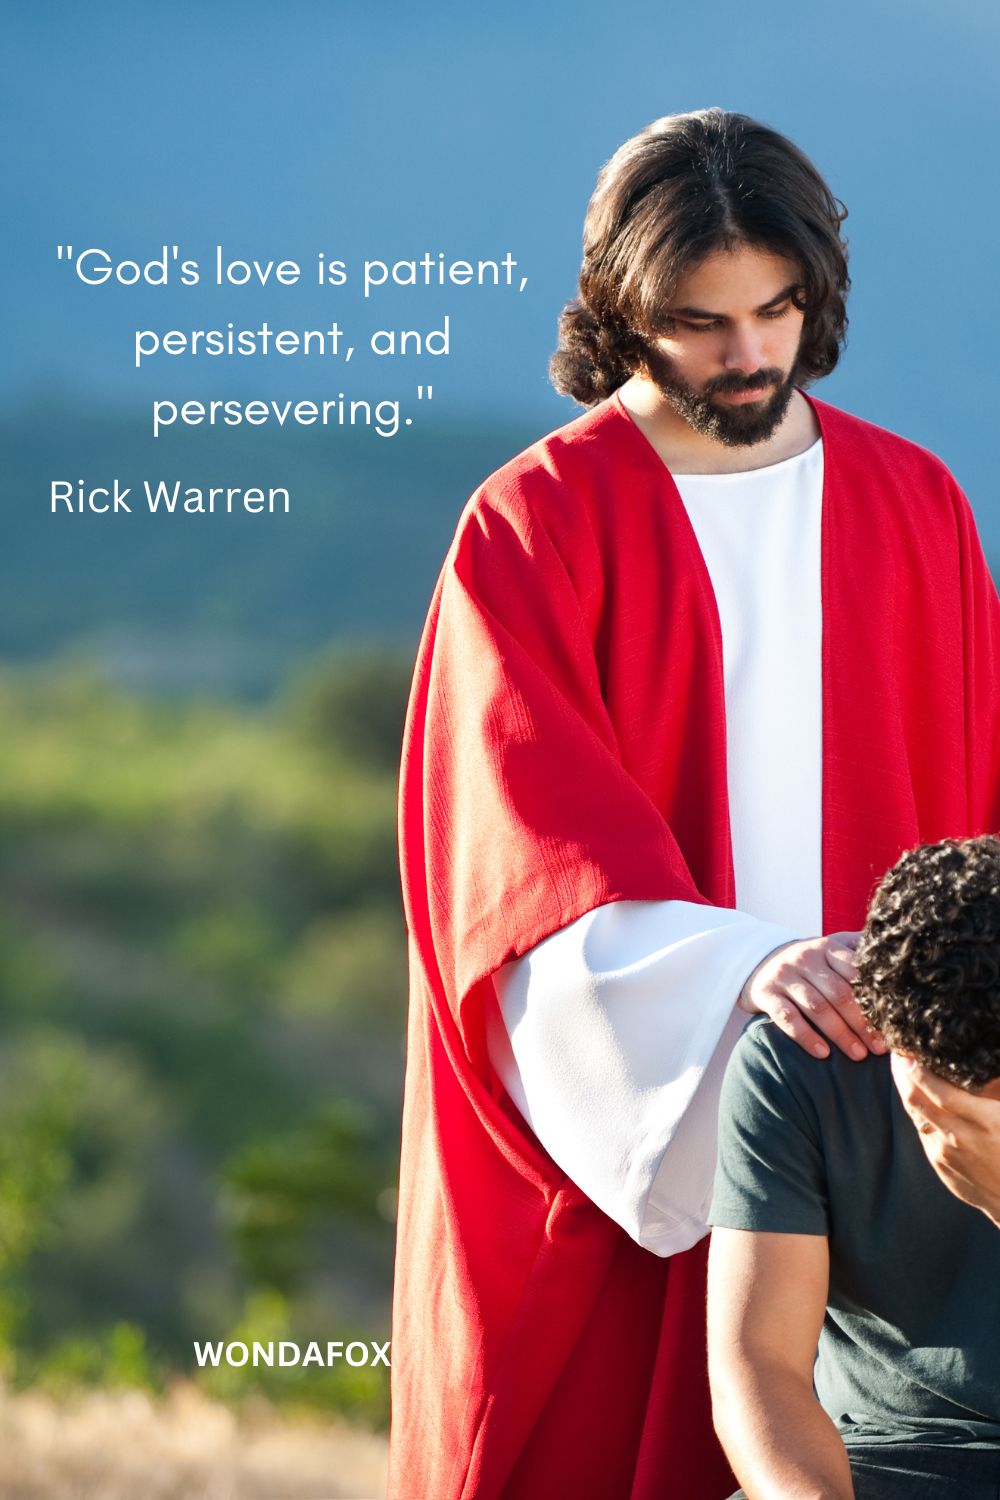 "God's love is patient, persistent, and persevering."
Rick Warren